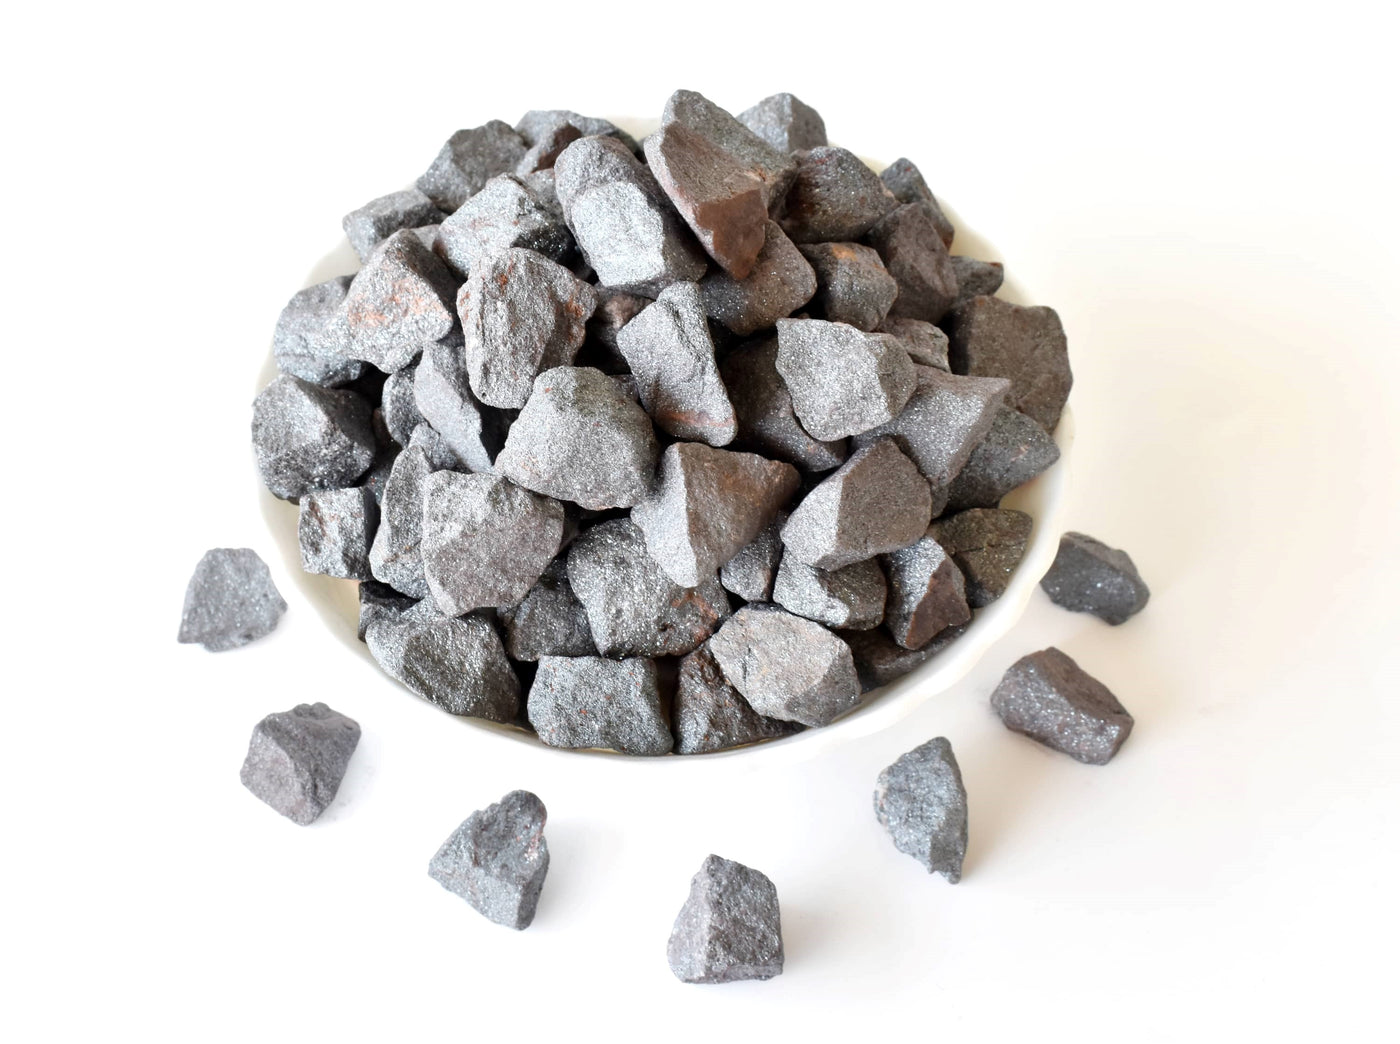 Hematite Rough Rocks (Focuses Energy and Emotions)